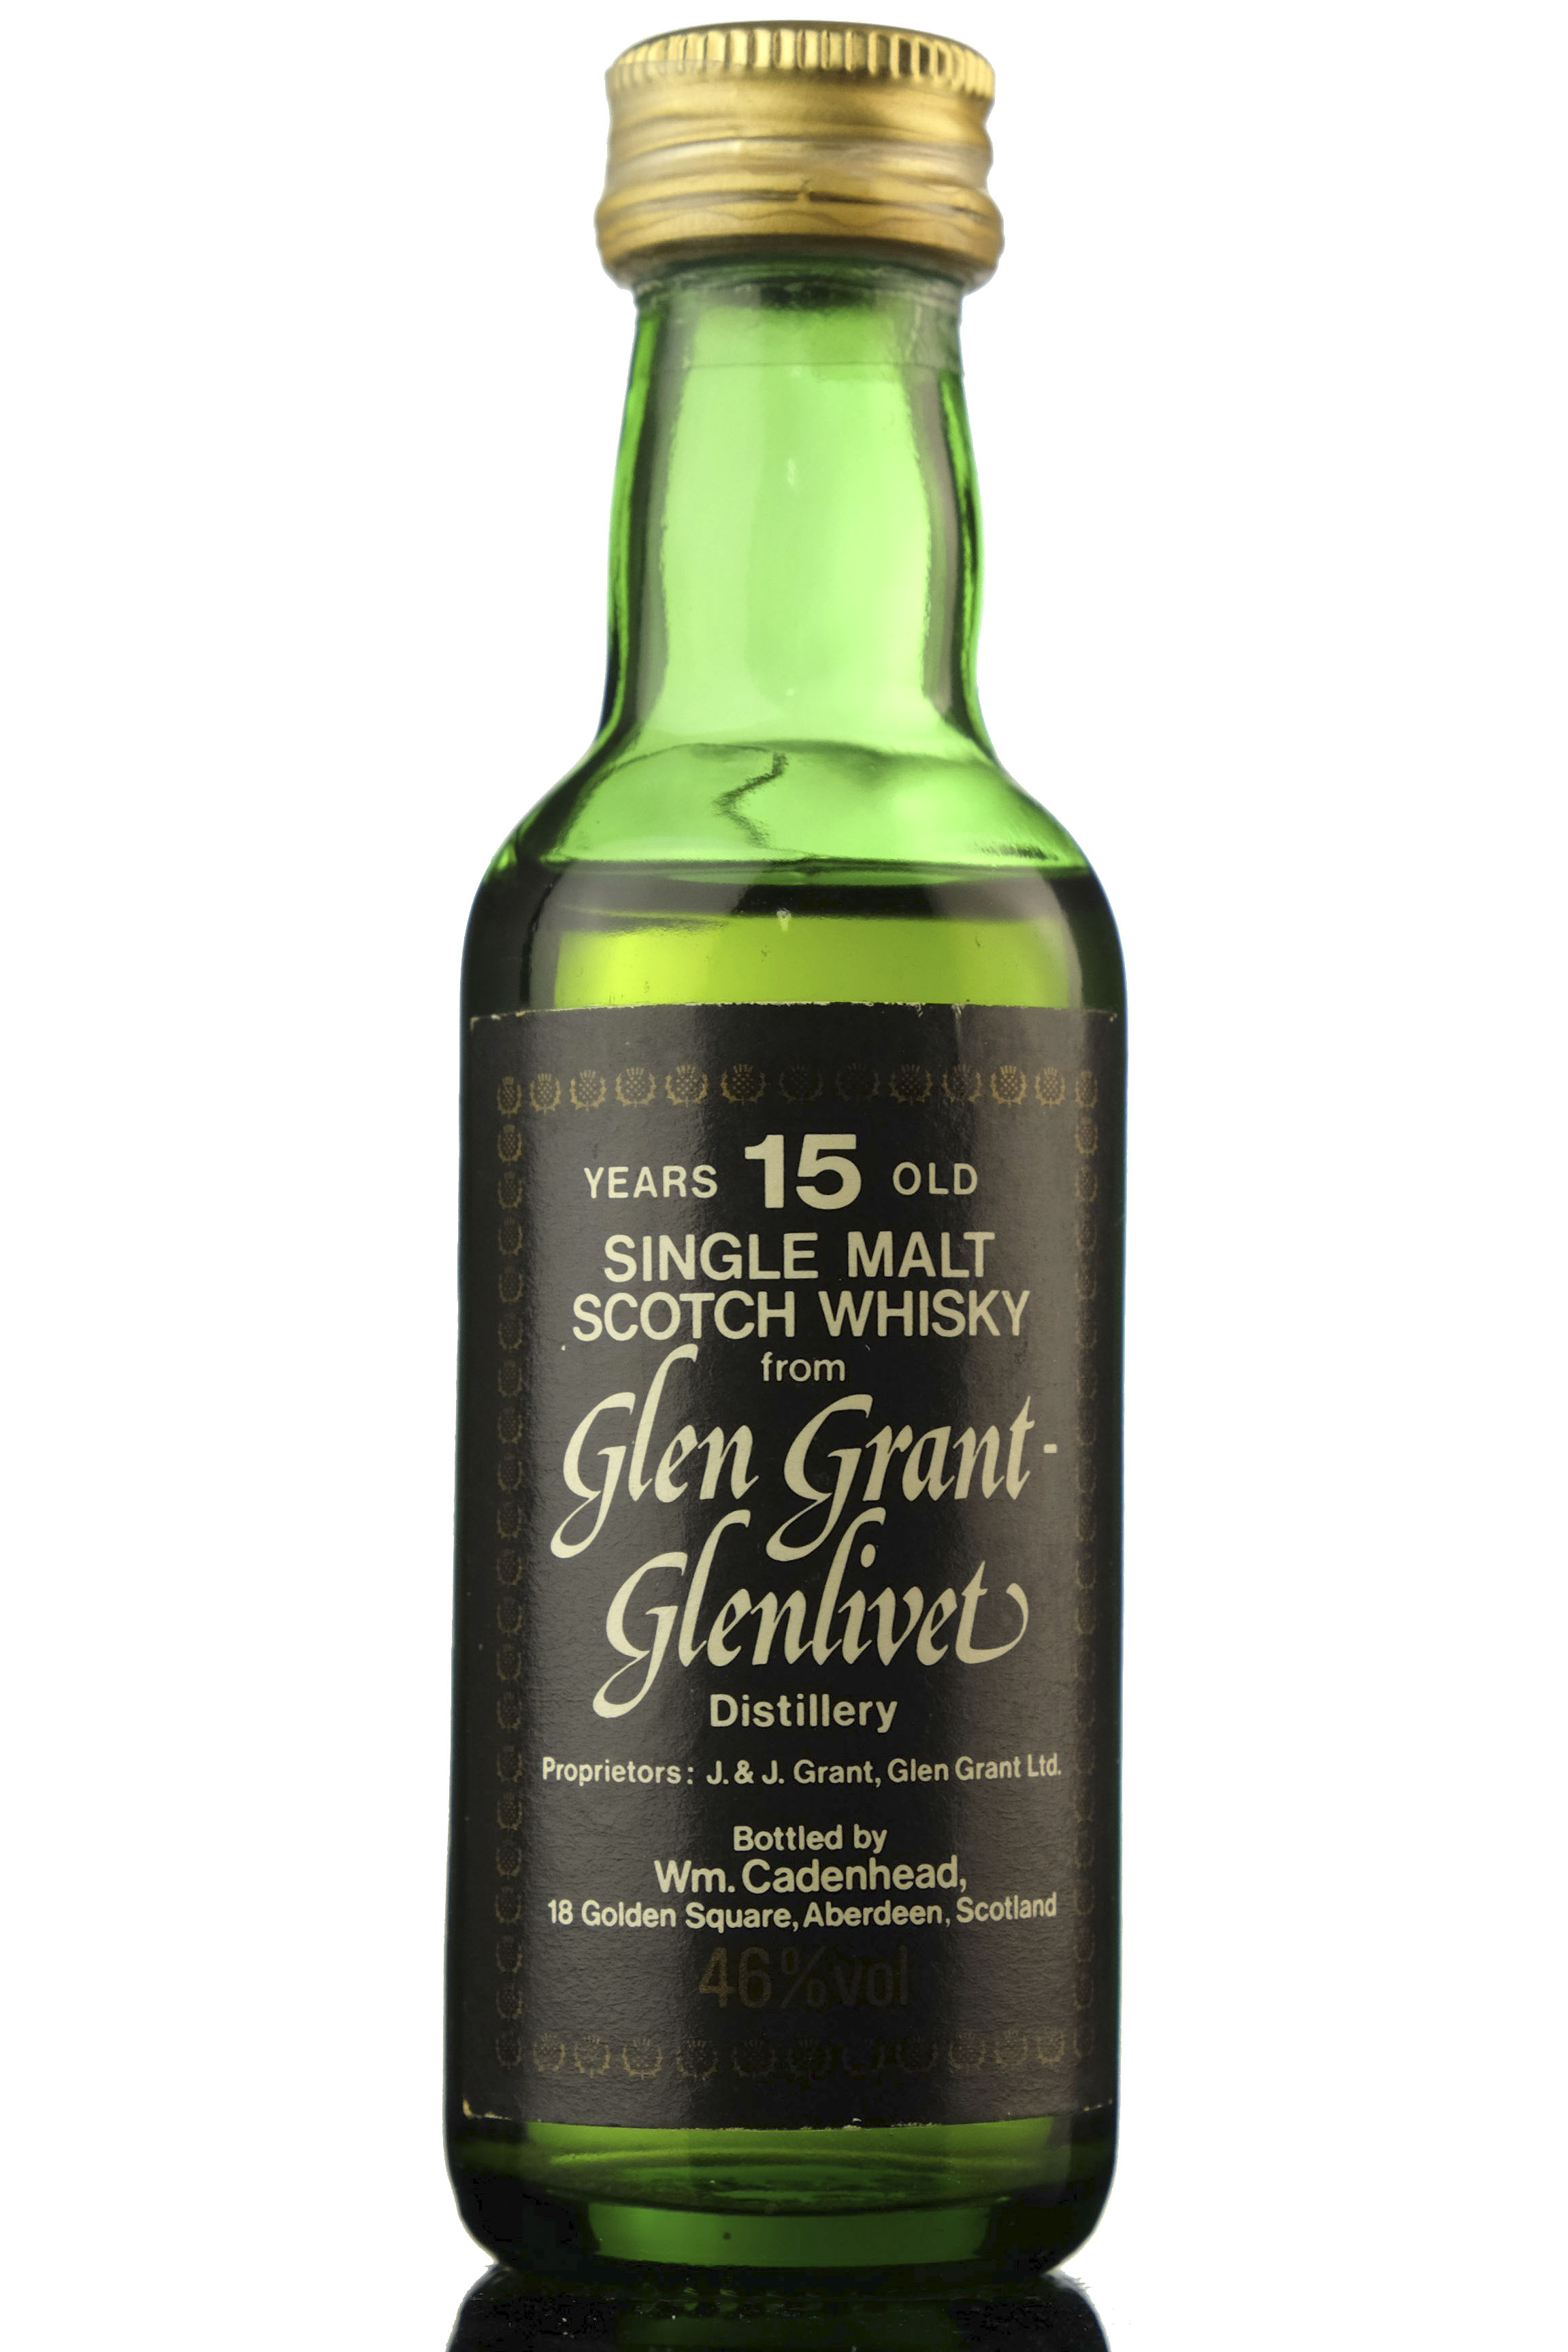 Glen Grant-Glenlivet 15 Year Old - Cadenhead Miniature